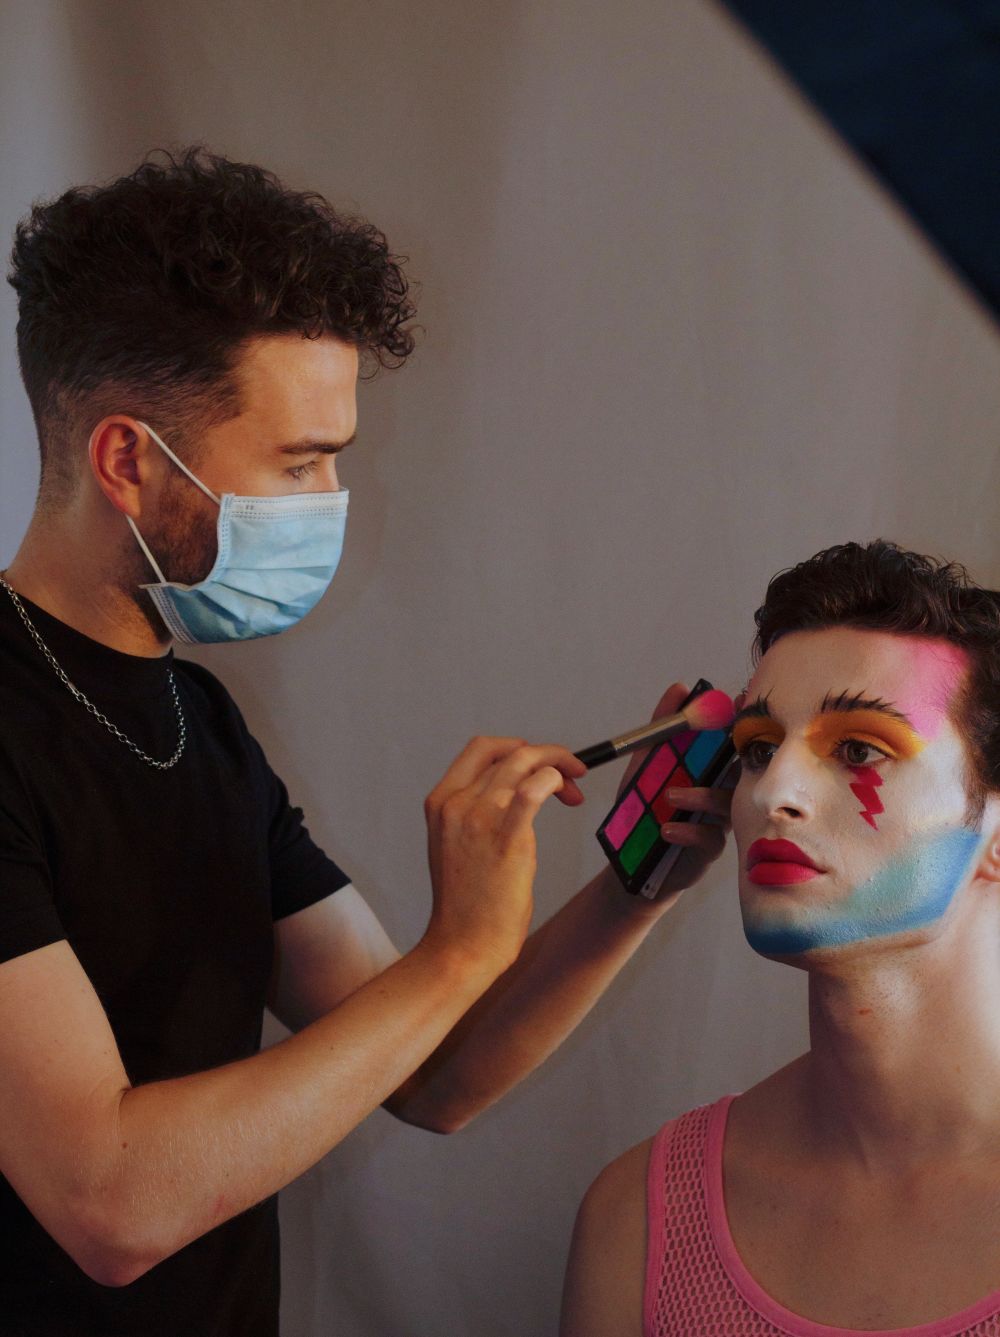 Craig putting makeup on a model